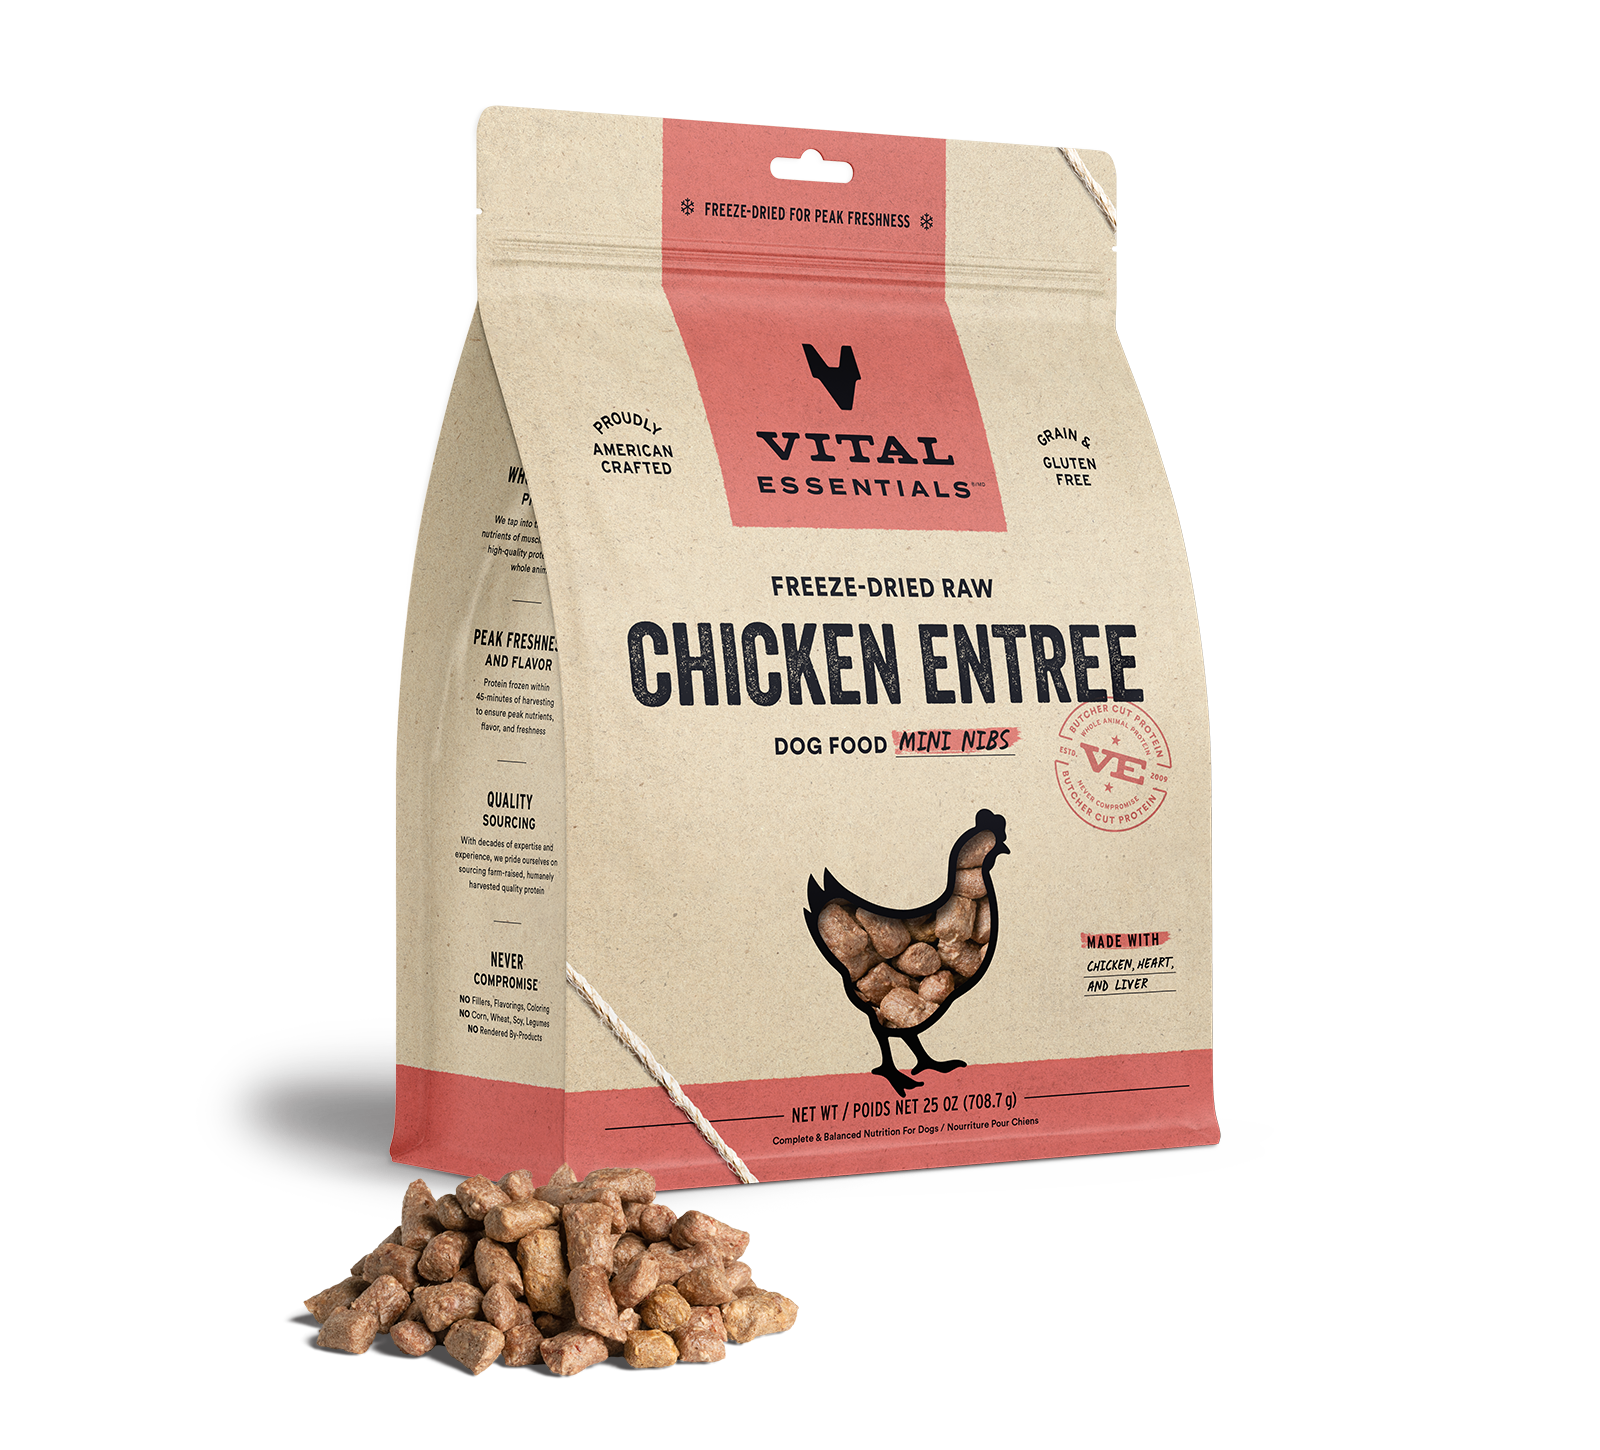 Vital Essentials Freeze-Dried Raw Chicken Entree Dog Food Mini Nibs, 25 oz - Healing/First Aid